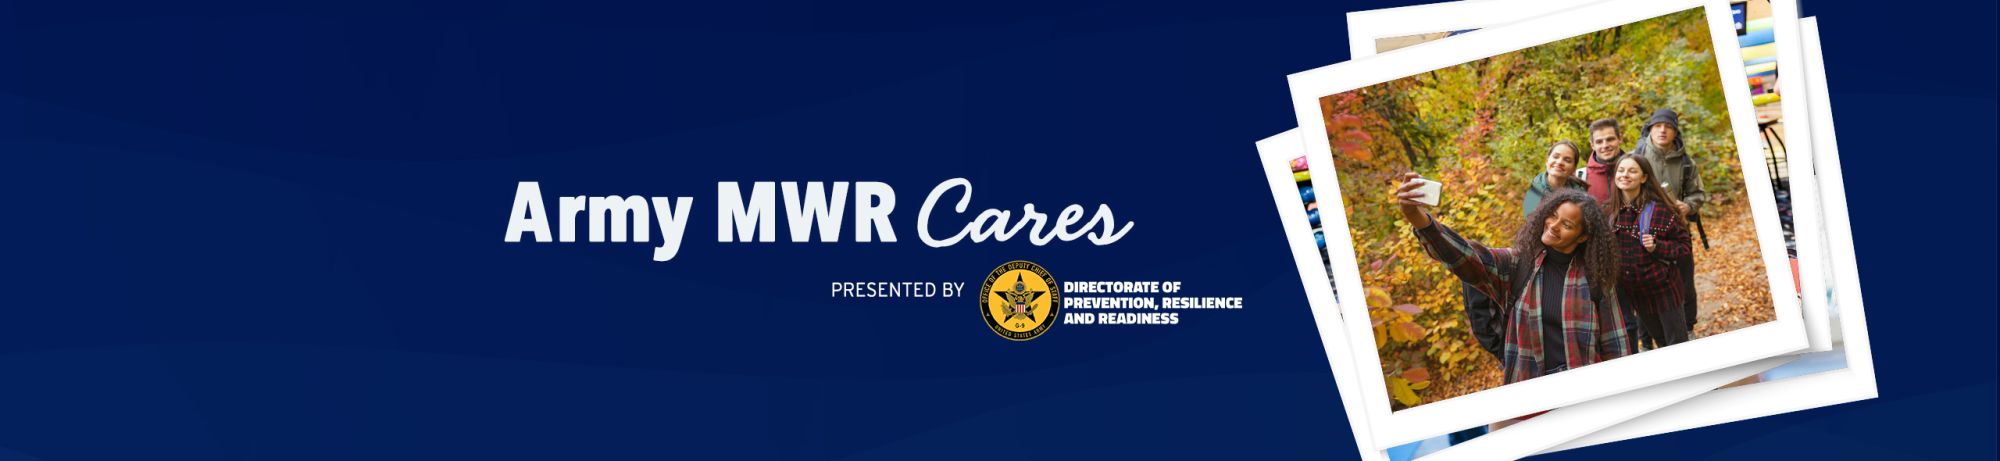 MWR Cares